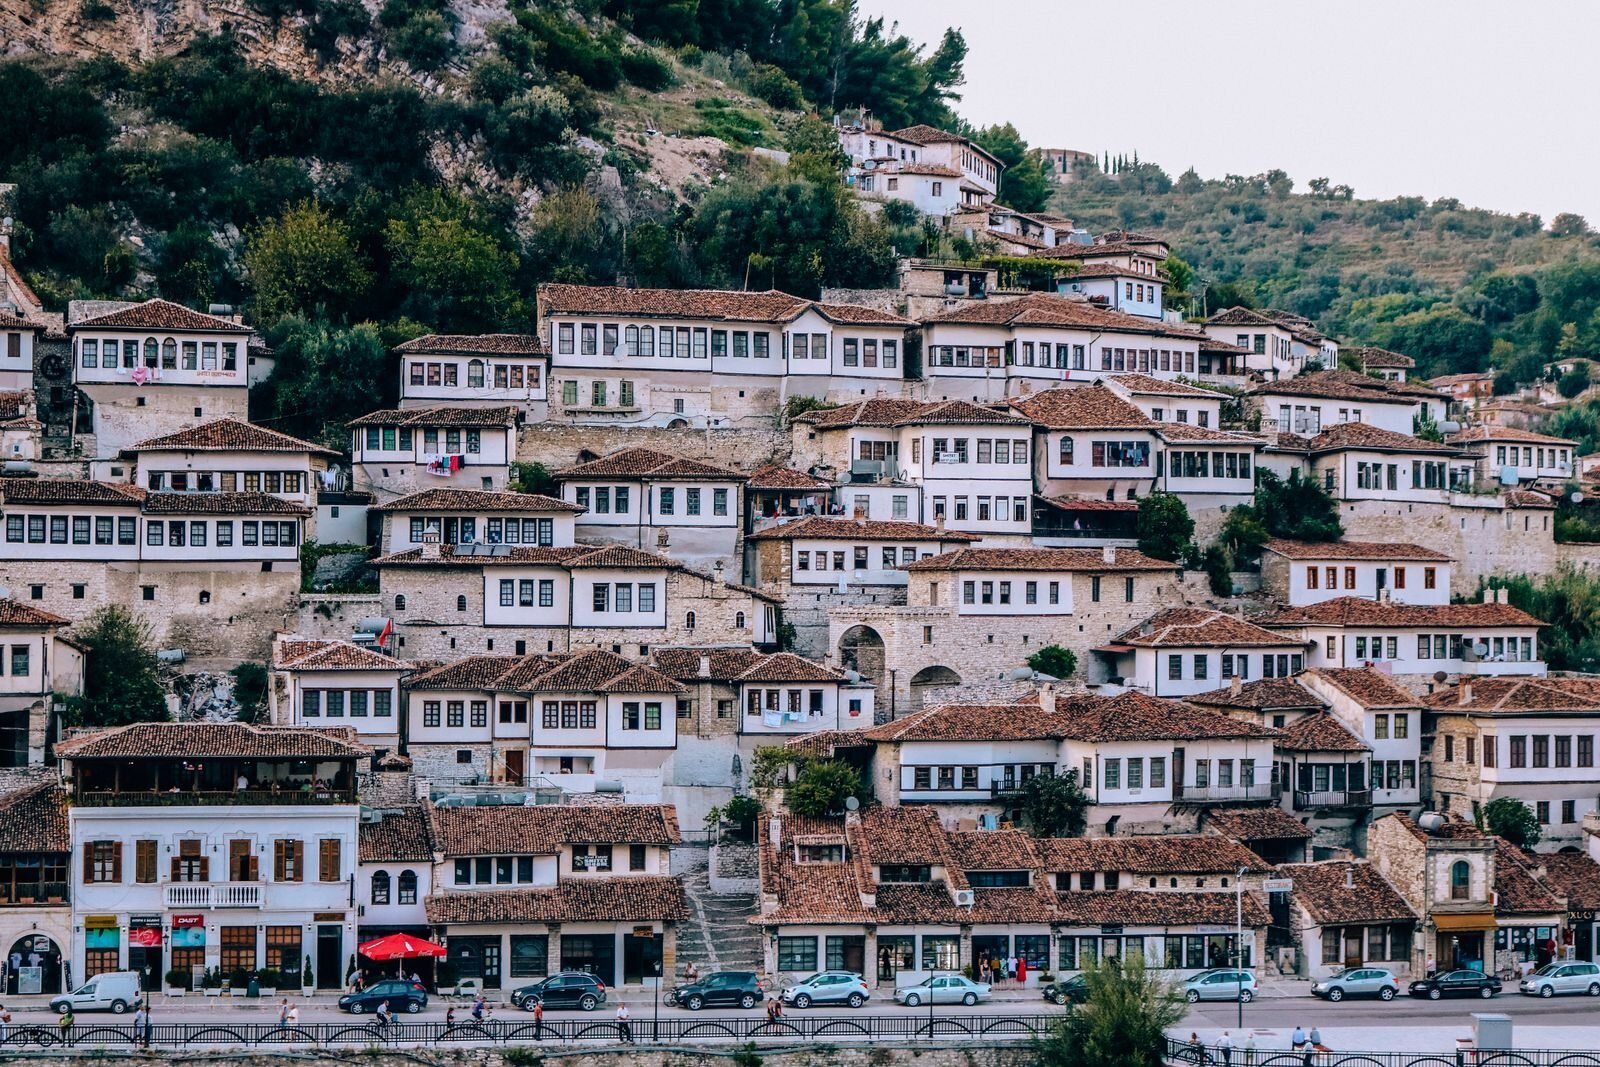 Berat - city of a thousand windows